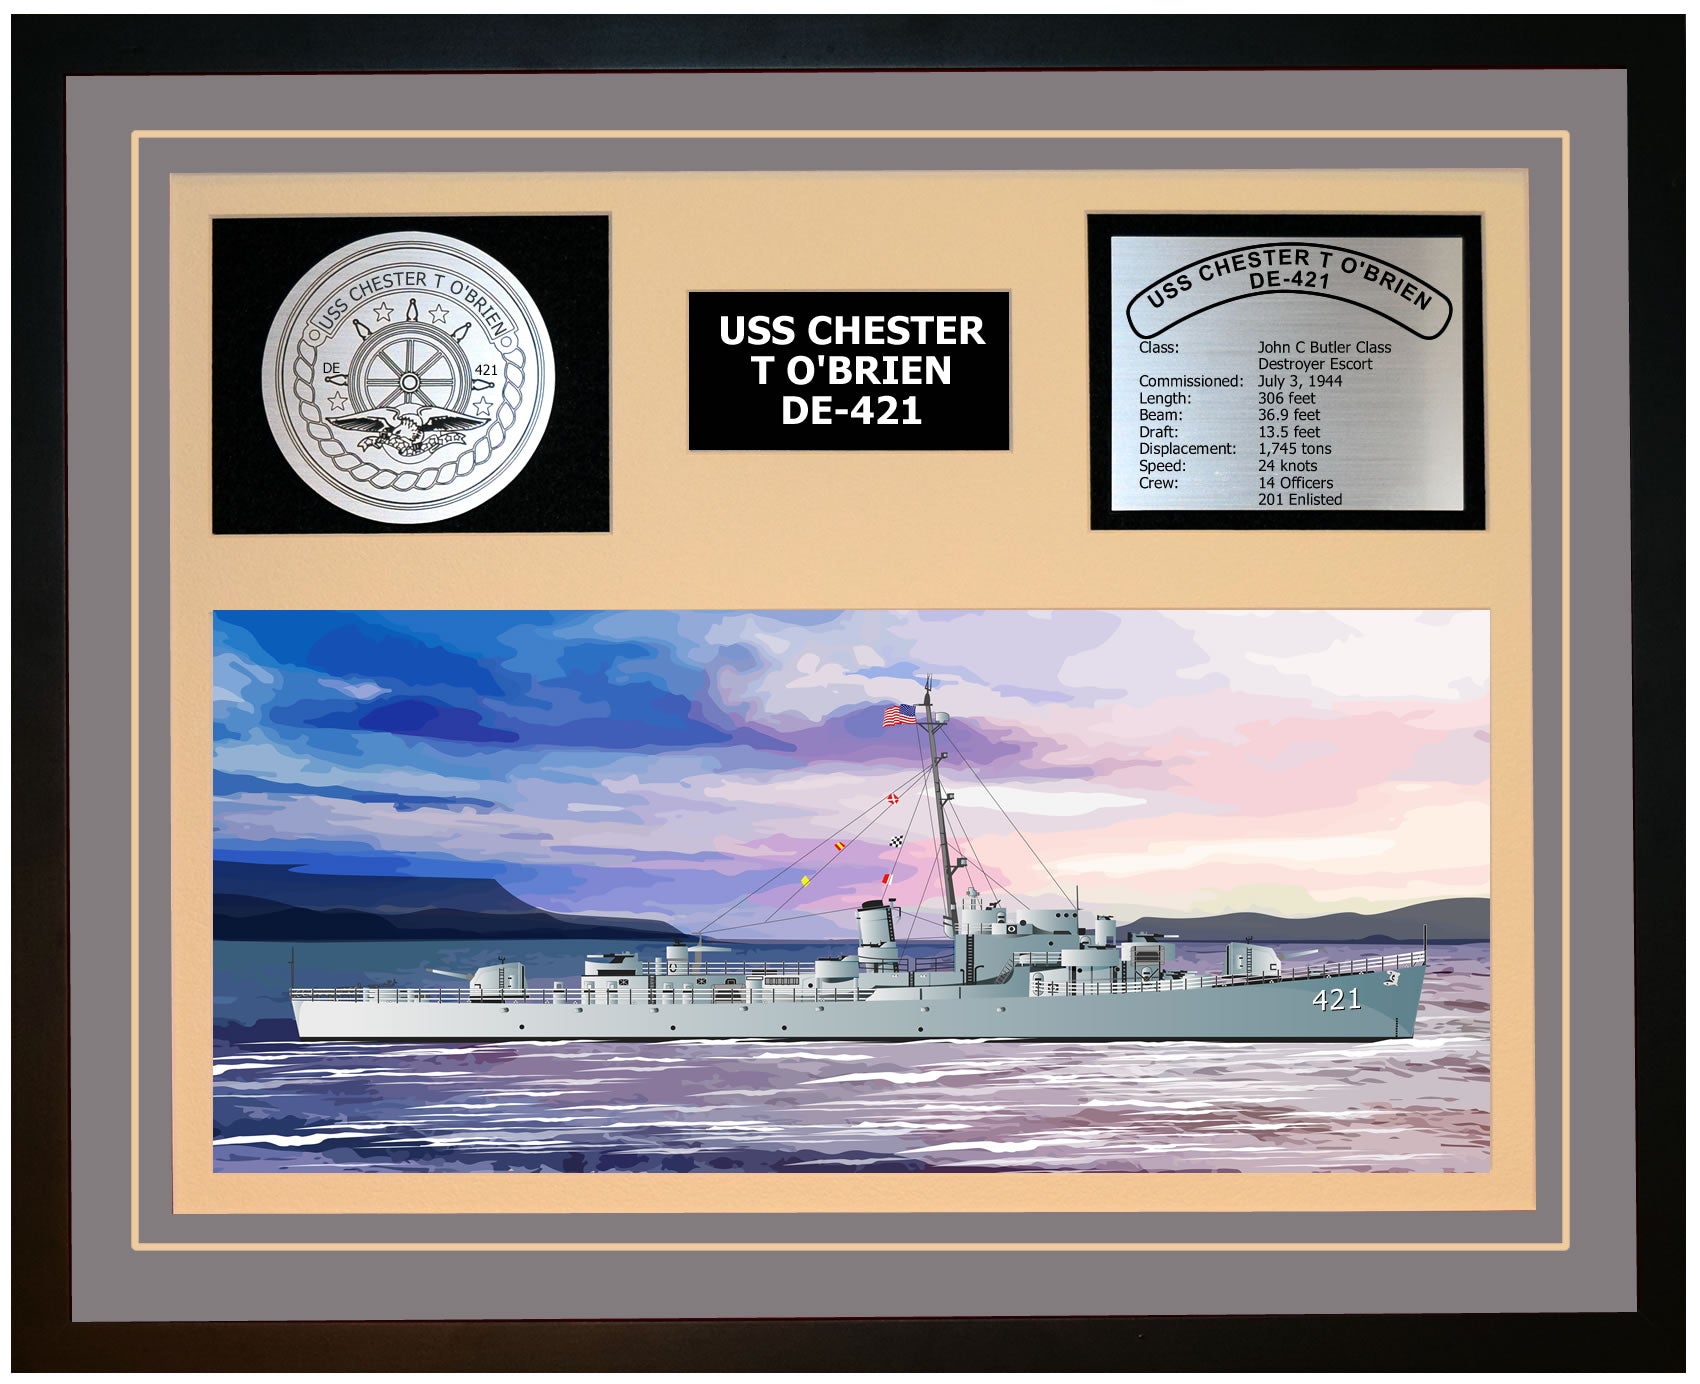 USS CHESTER T OBRIEN DE-421 Framed Navy Ship Display Grey